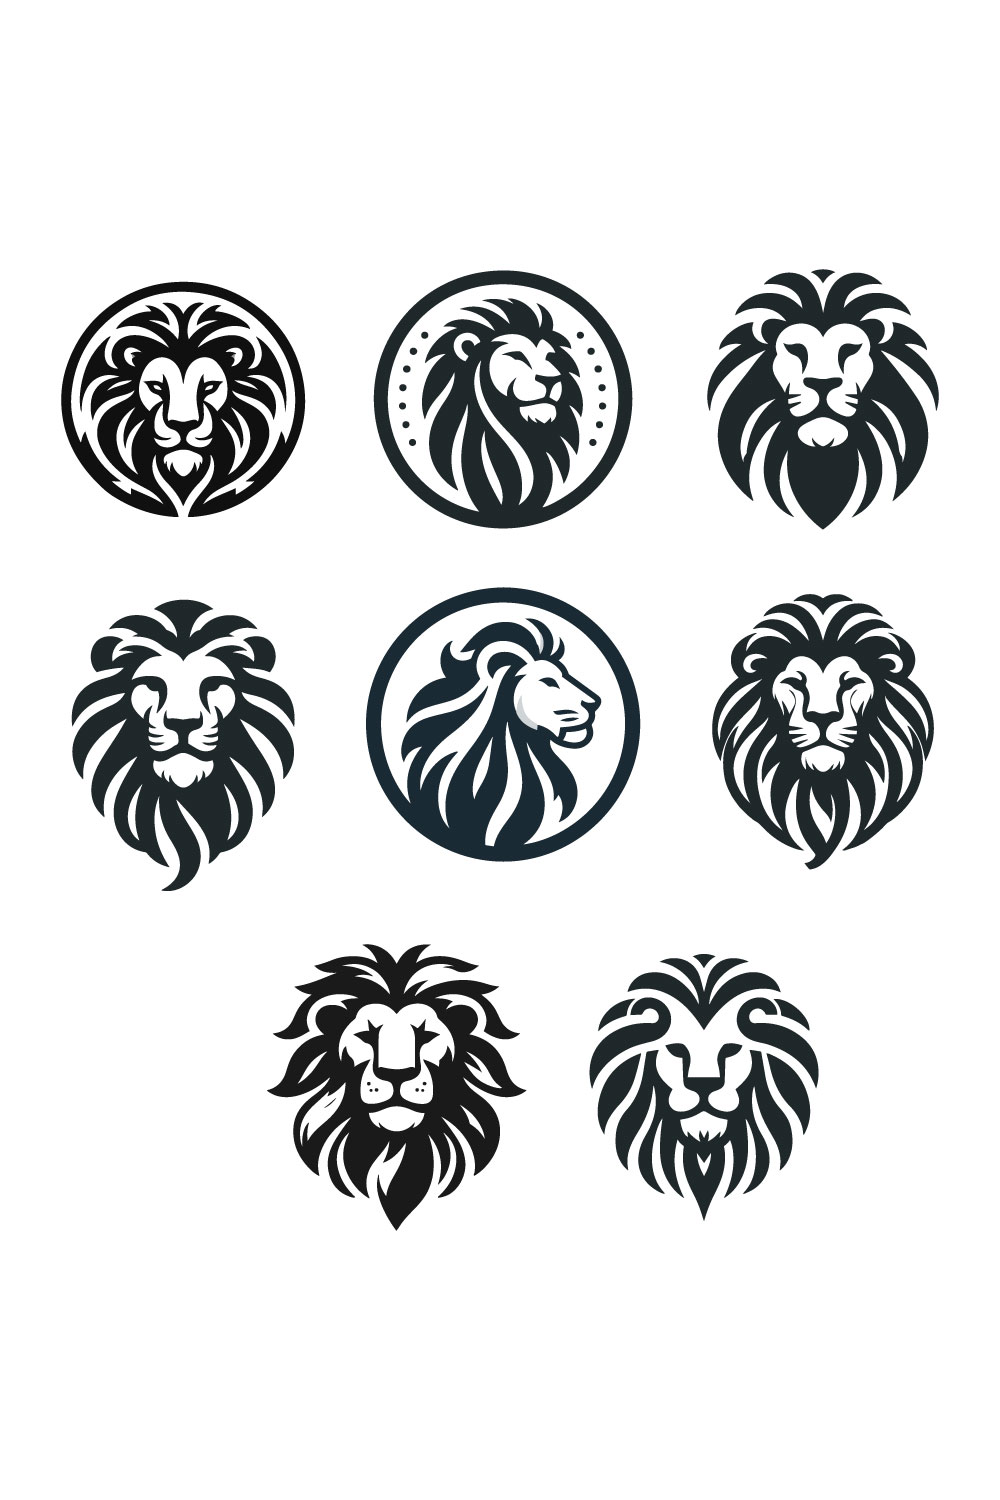 8 Lion Logos Vector Illustration pinterest preview image.